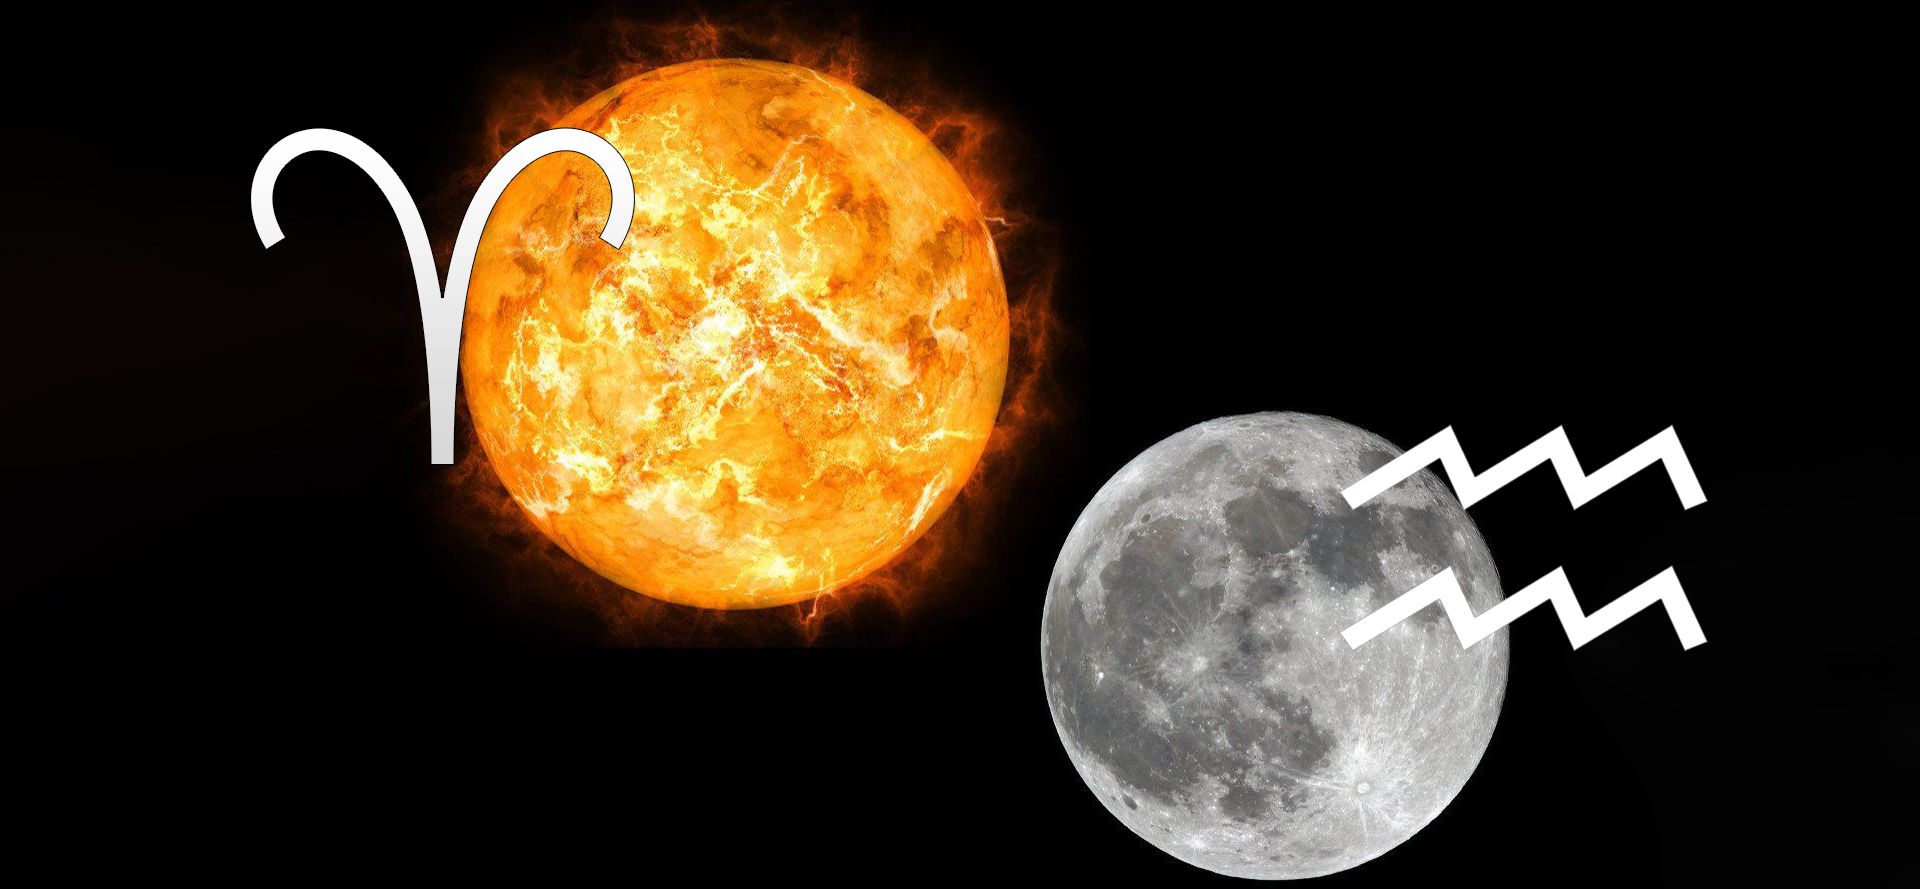 Aries Sun and Aquarius Moon.